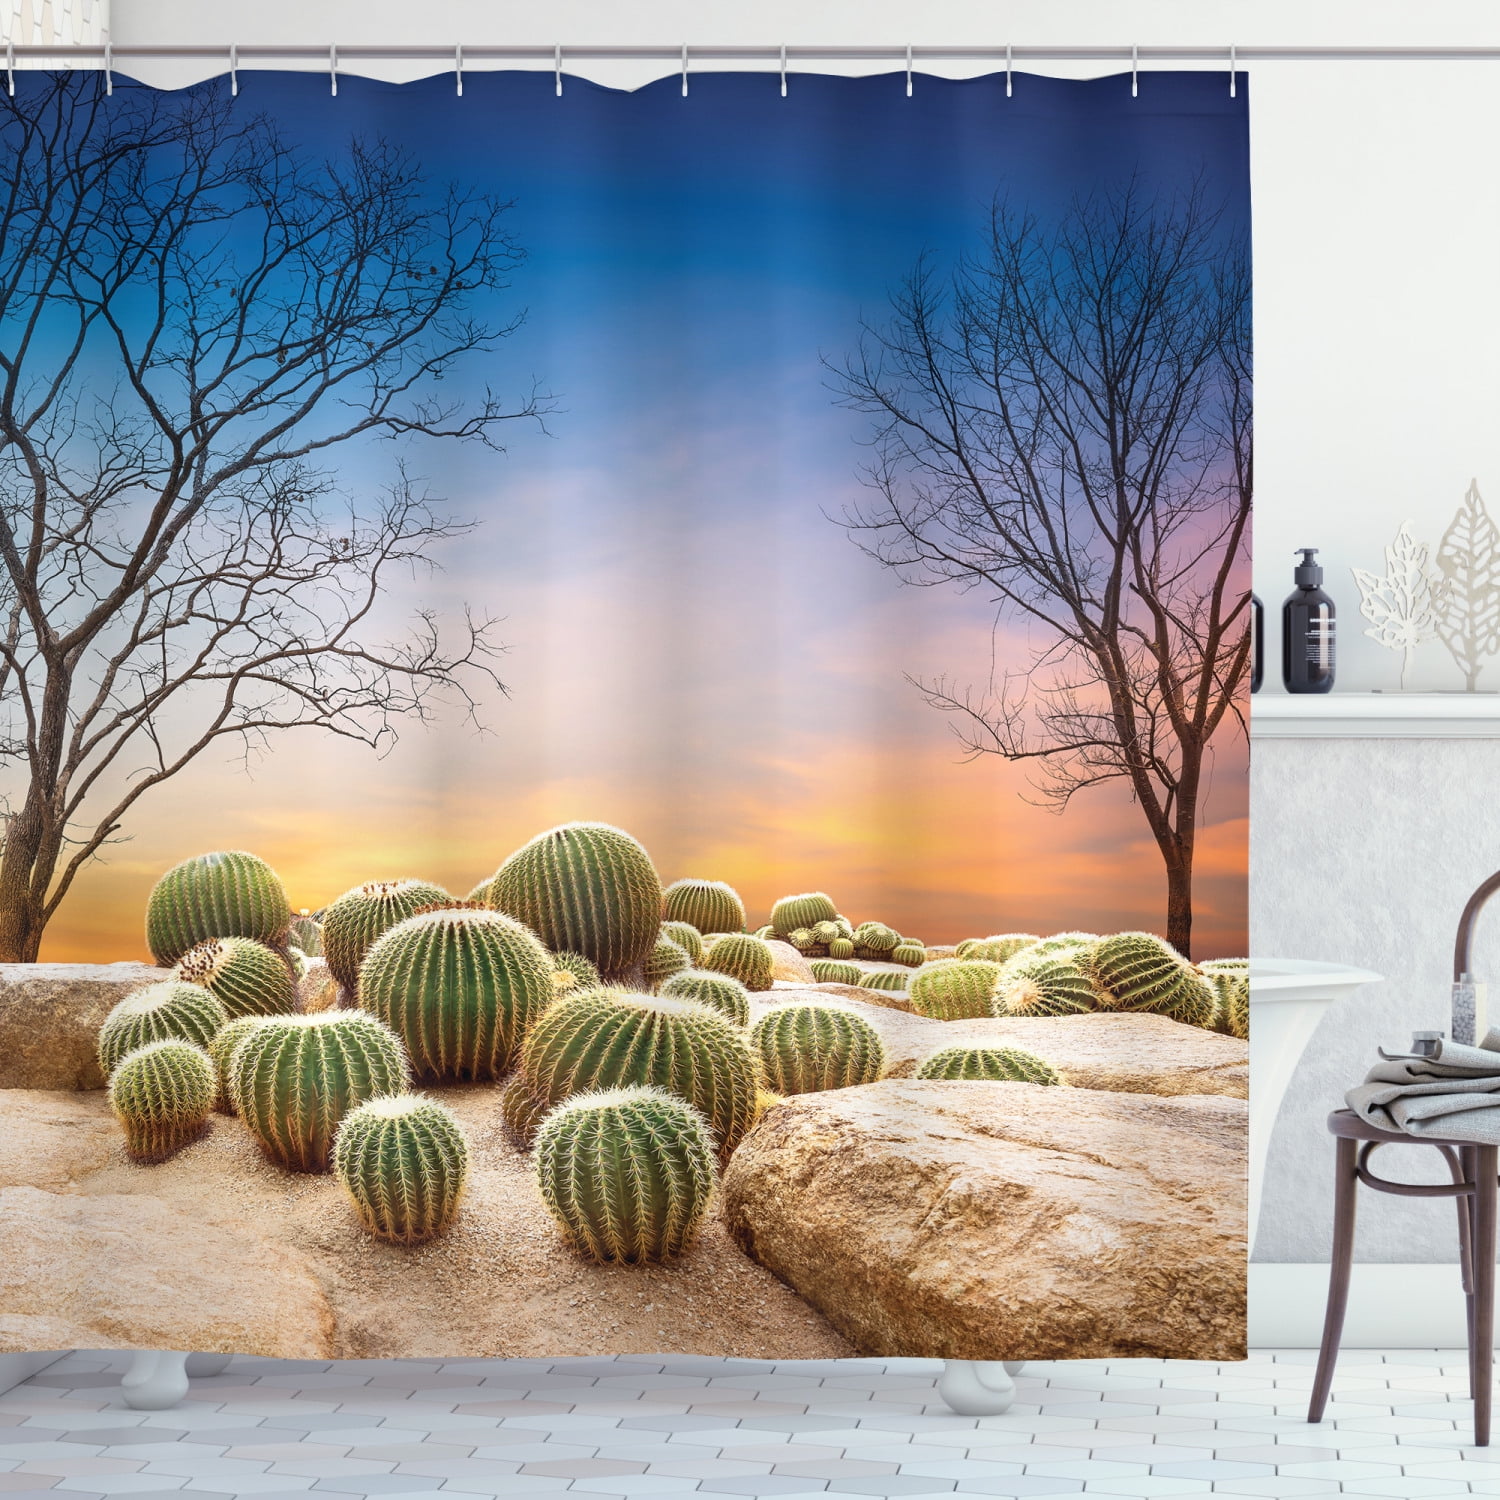 Cactus Shower Curtain Mexican Landscape Theme Print for Bathroom 